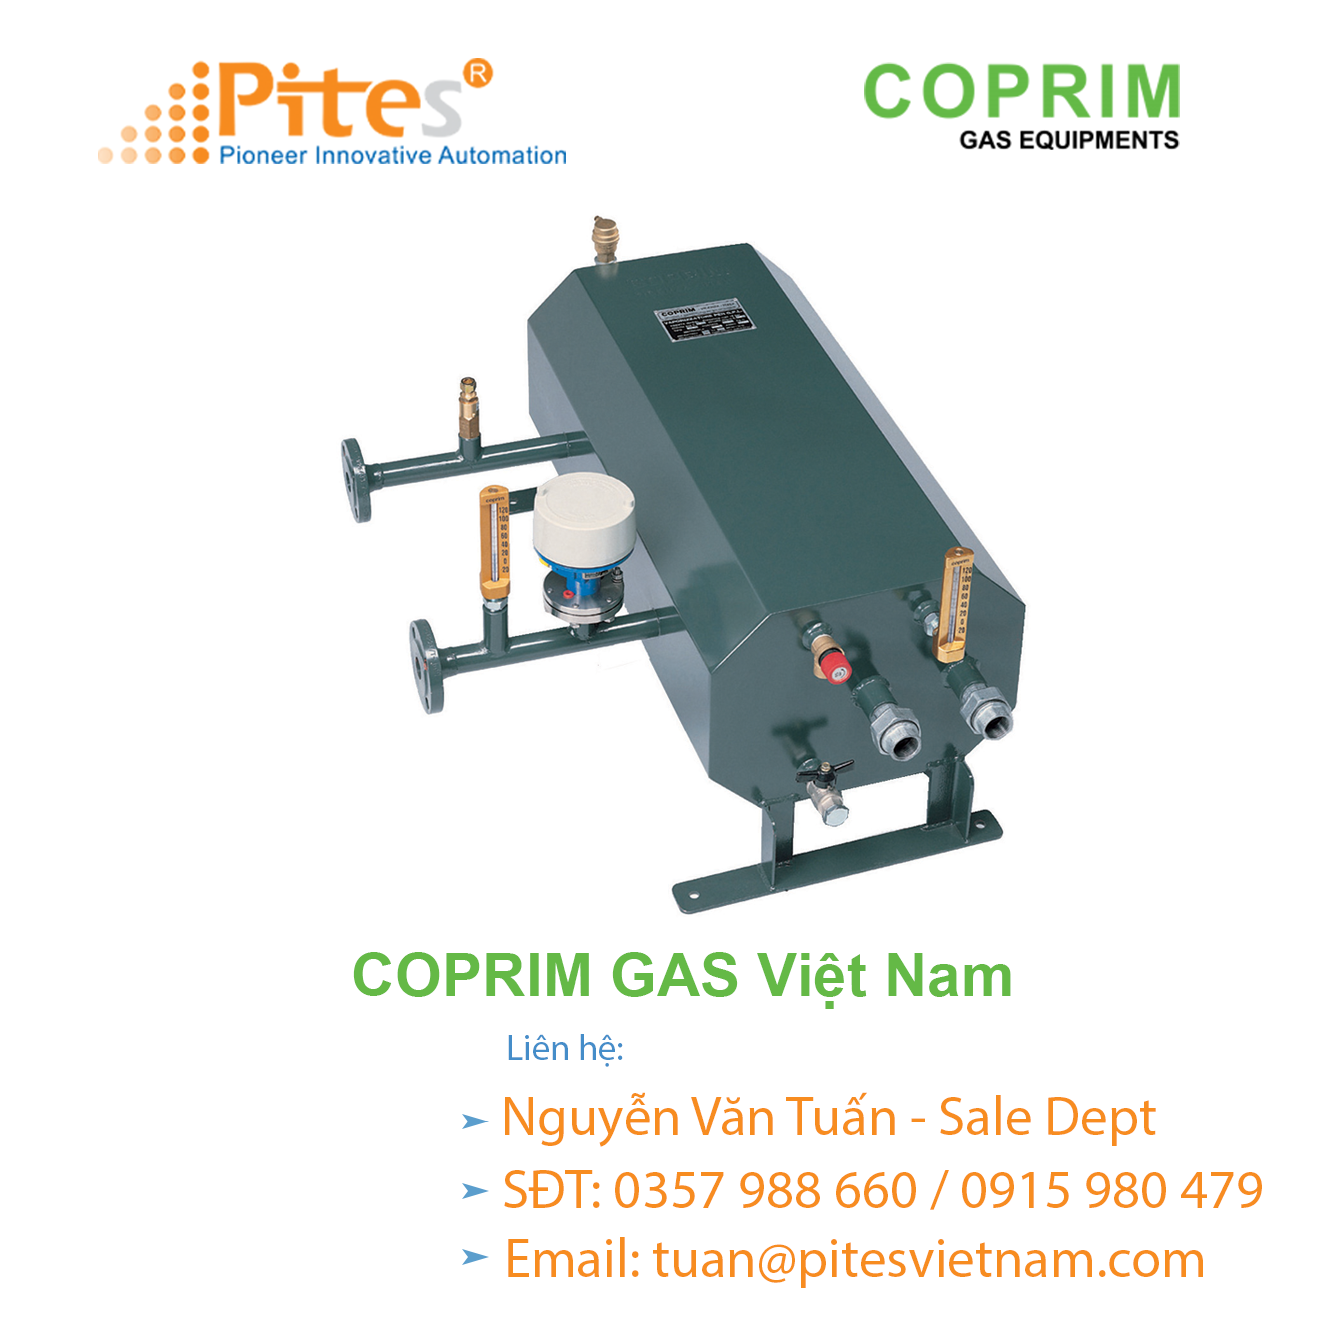 coprim-gas-vietnam-coprim-gas-viet-nam-dai-ly-coprim-gas-list-code-coprim-gas-part-4.png